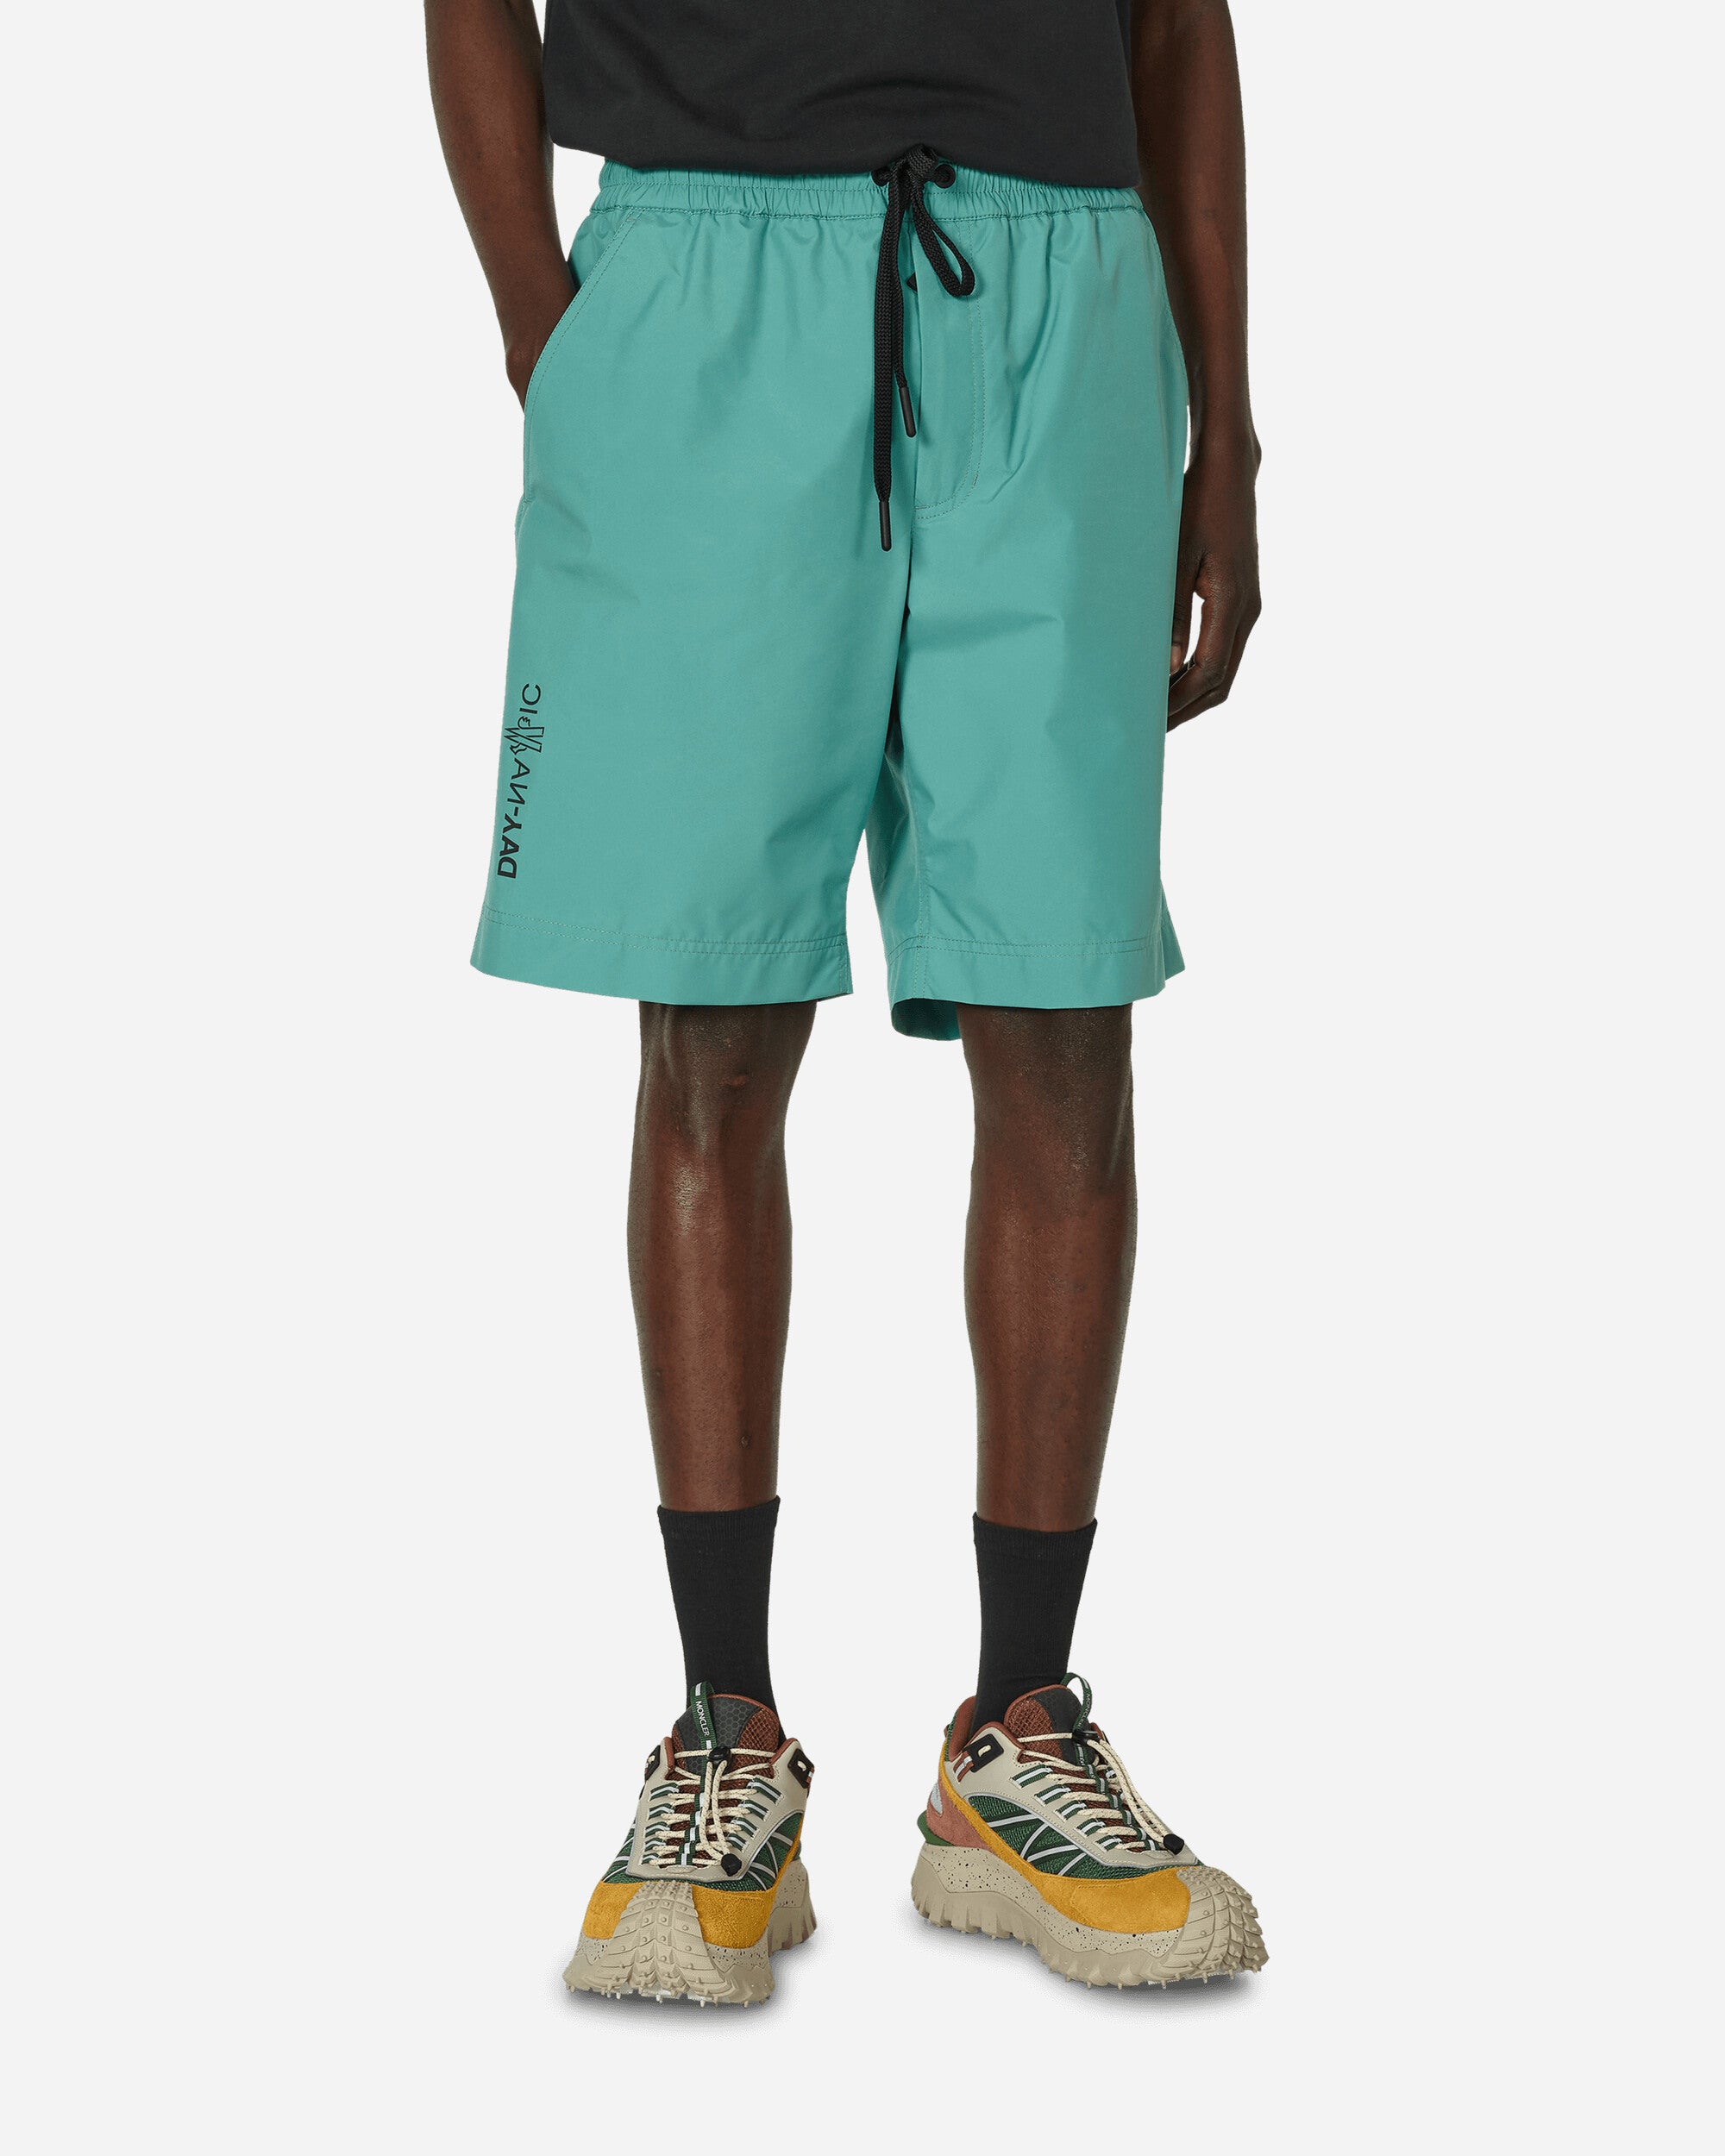 Moncler Grenoble Shorts Day-Namic Teal Shorts Short 2B0000154AL5 80R